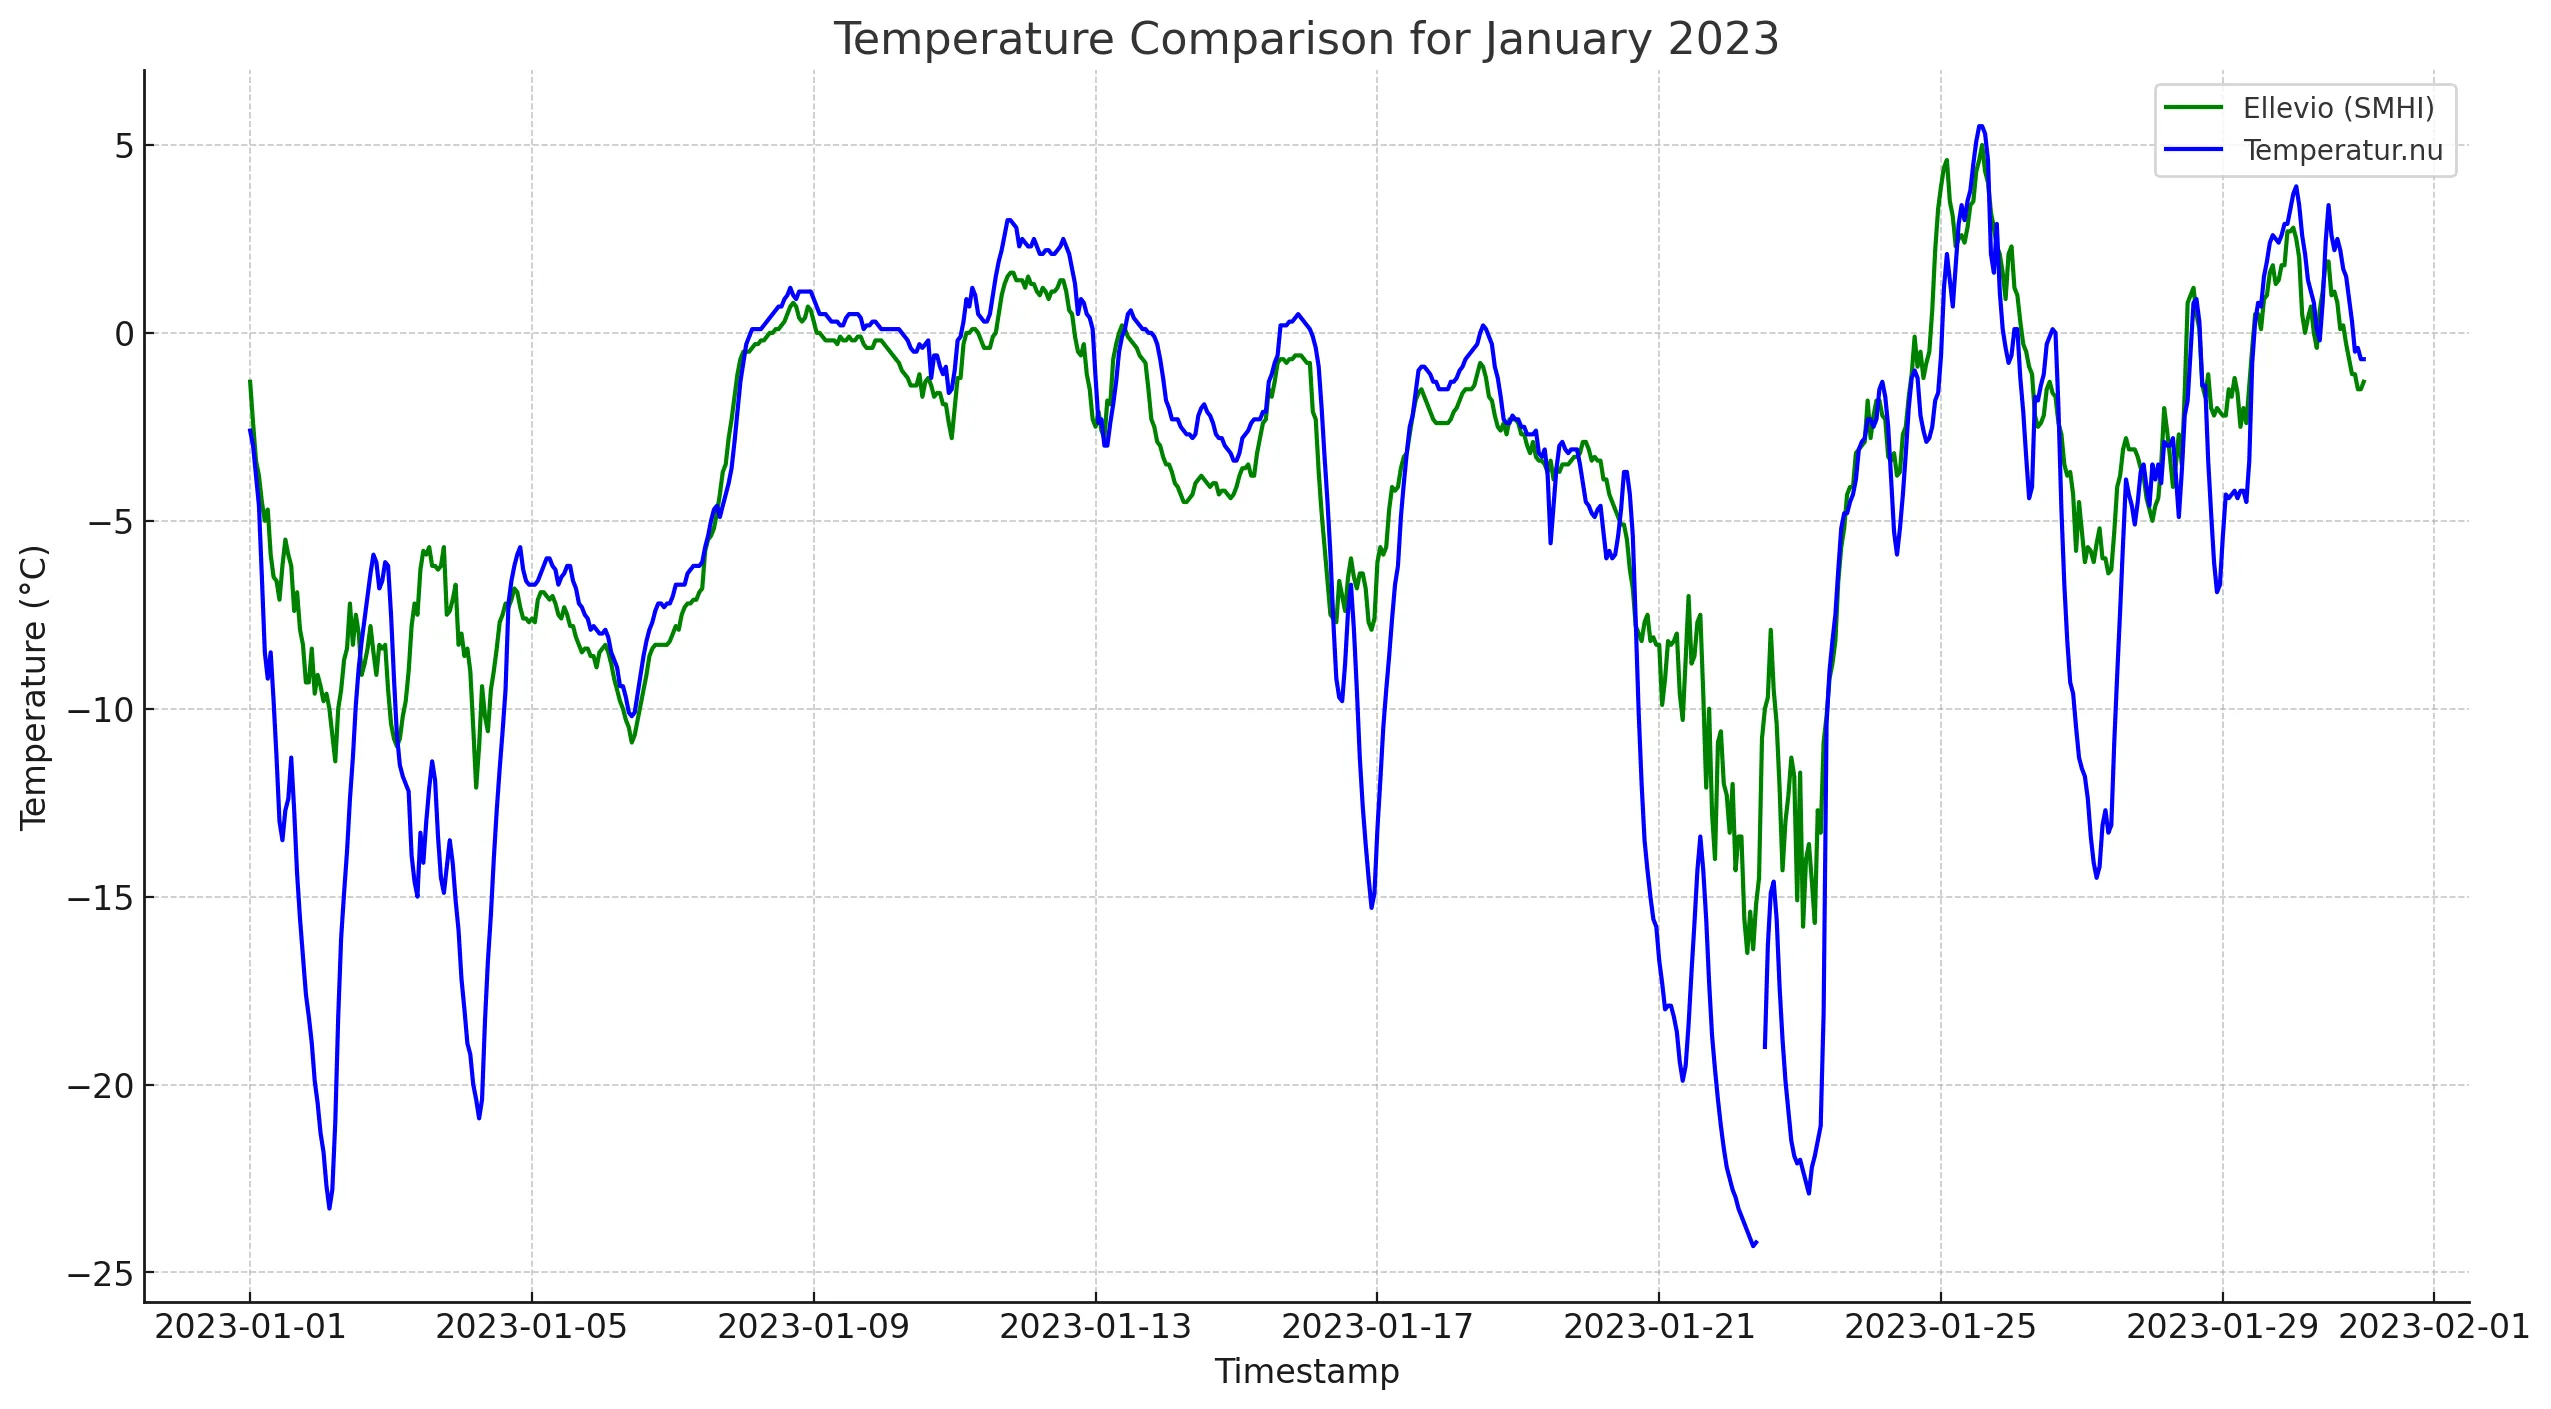 Average Daily Temperatures in January 2023 from Ellevio (SMHI) and Temperatur.nu